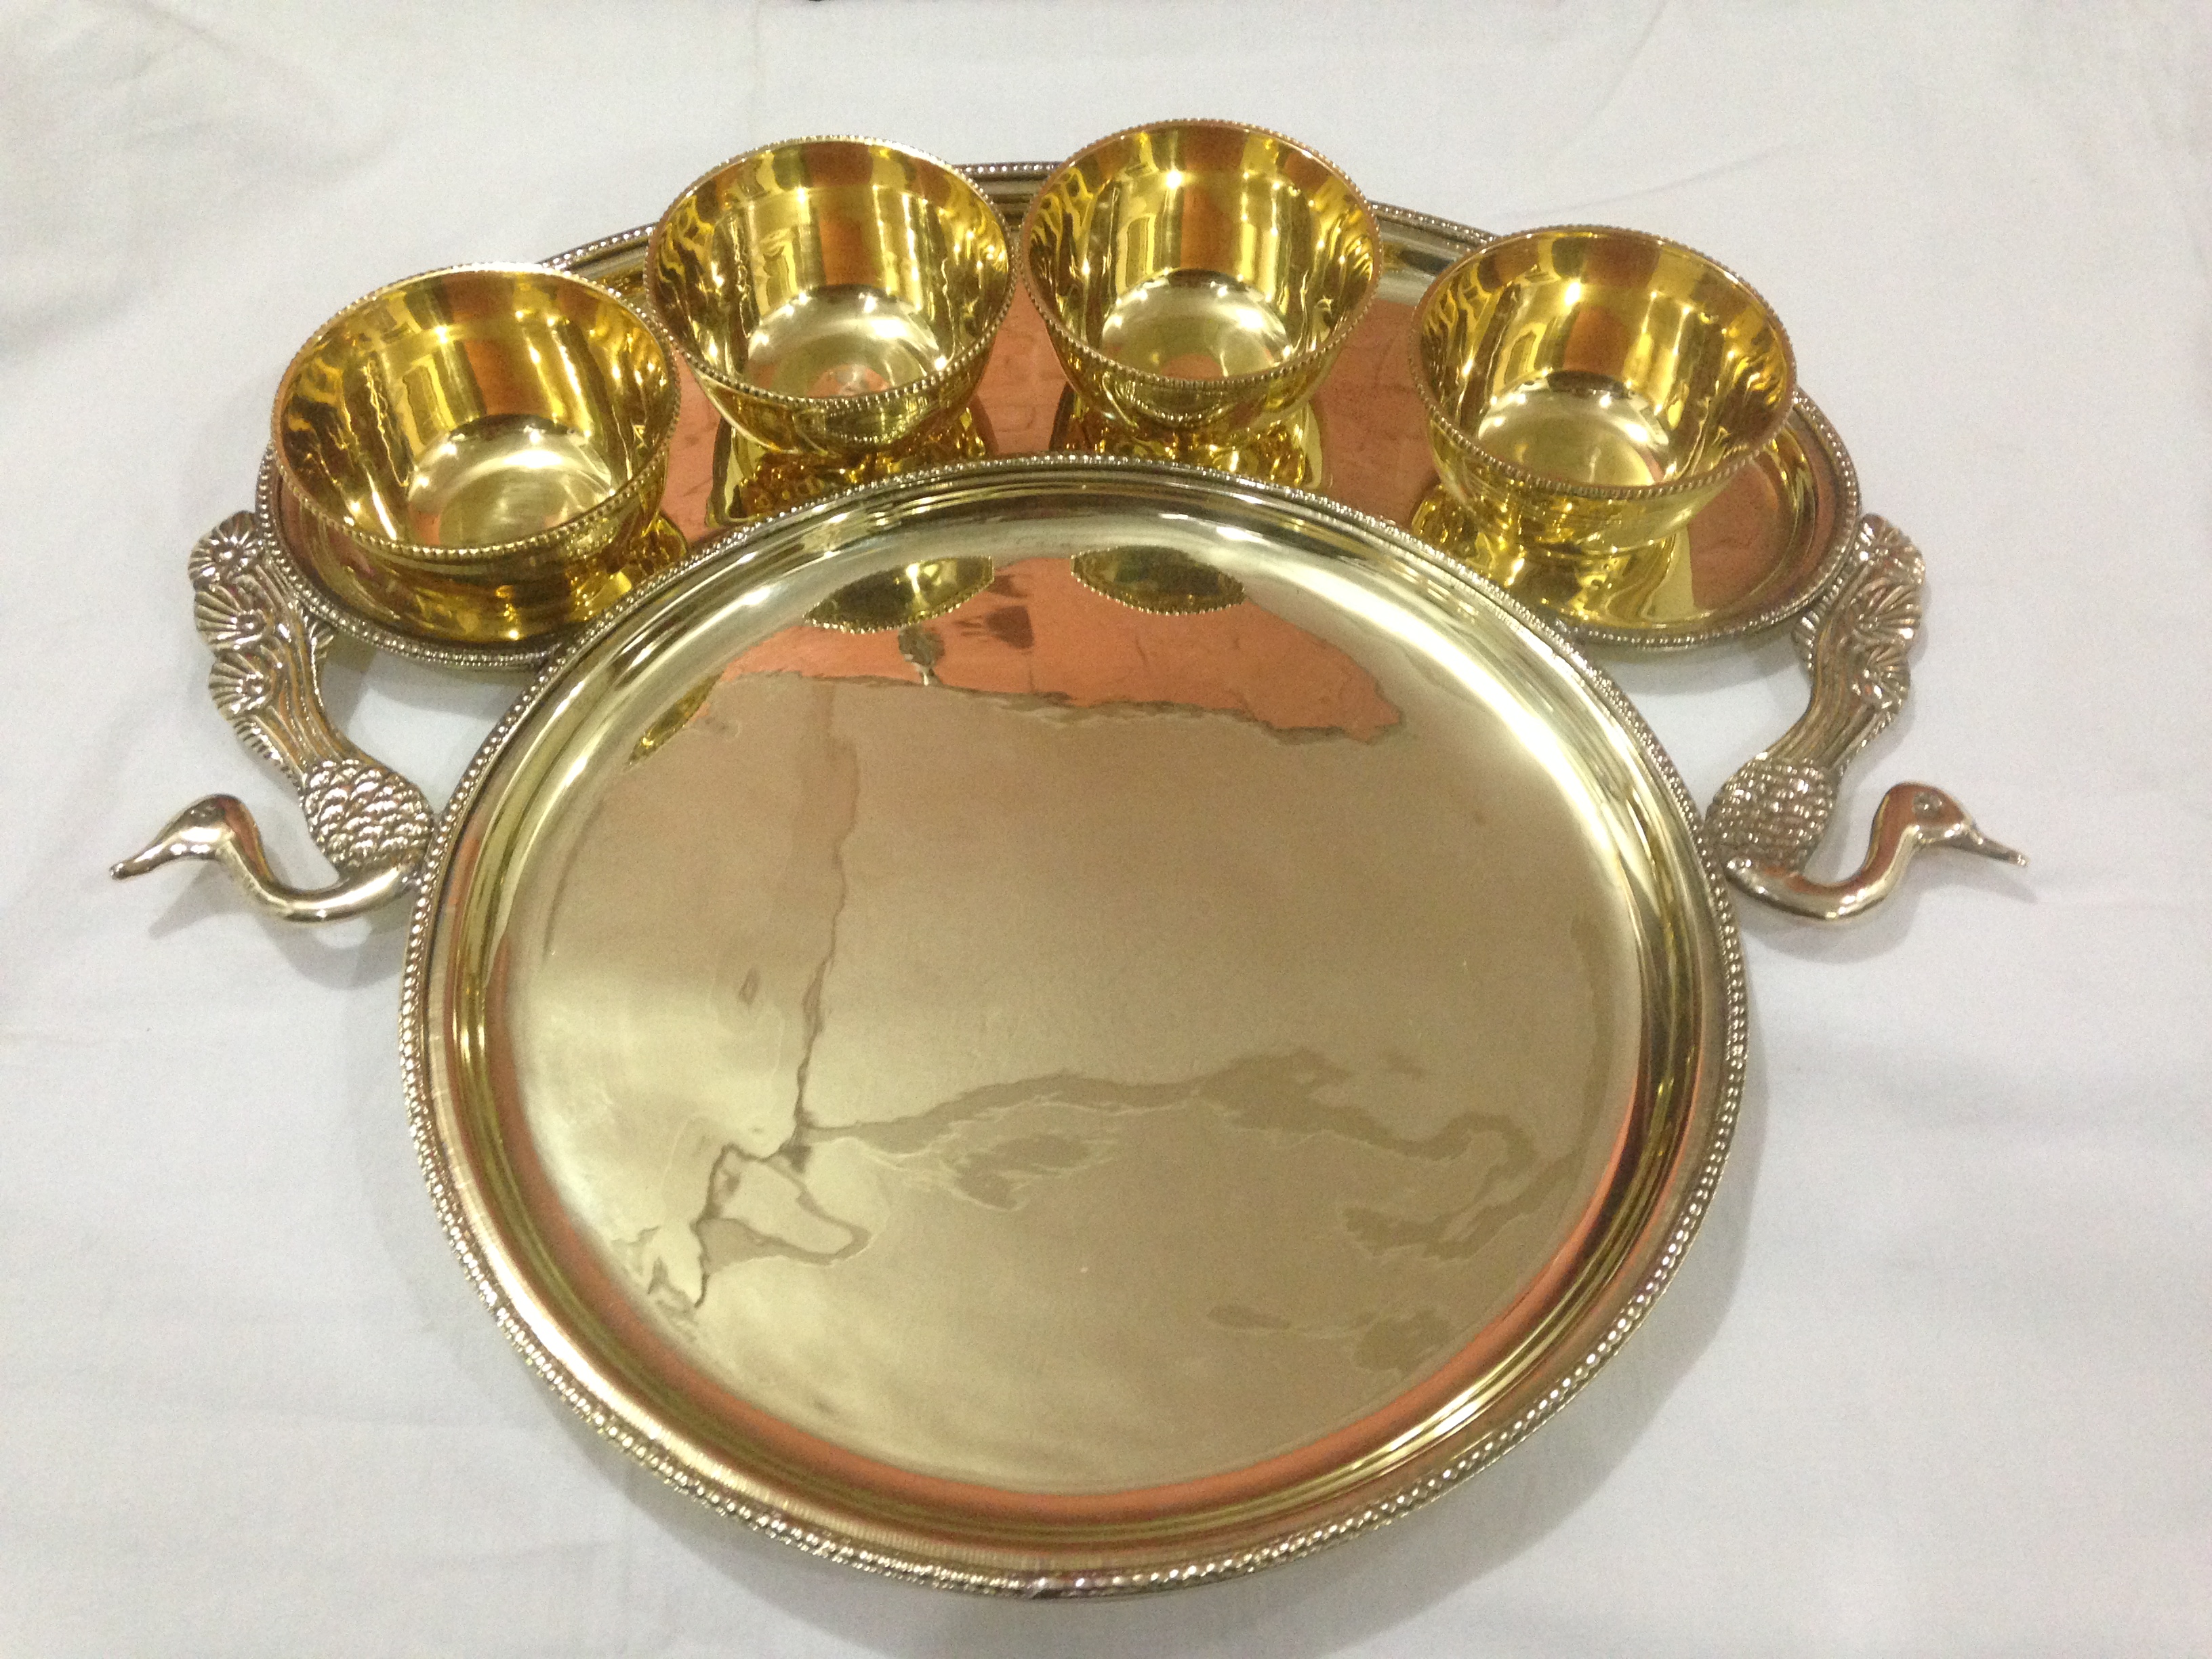 Brass Maharaja Thali set with Peacock handles